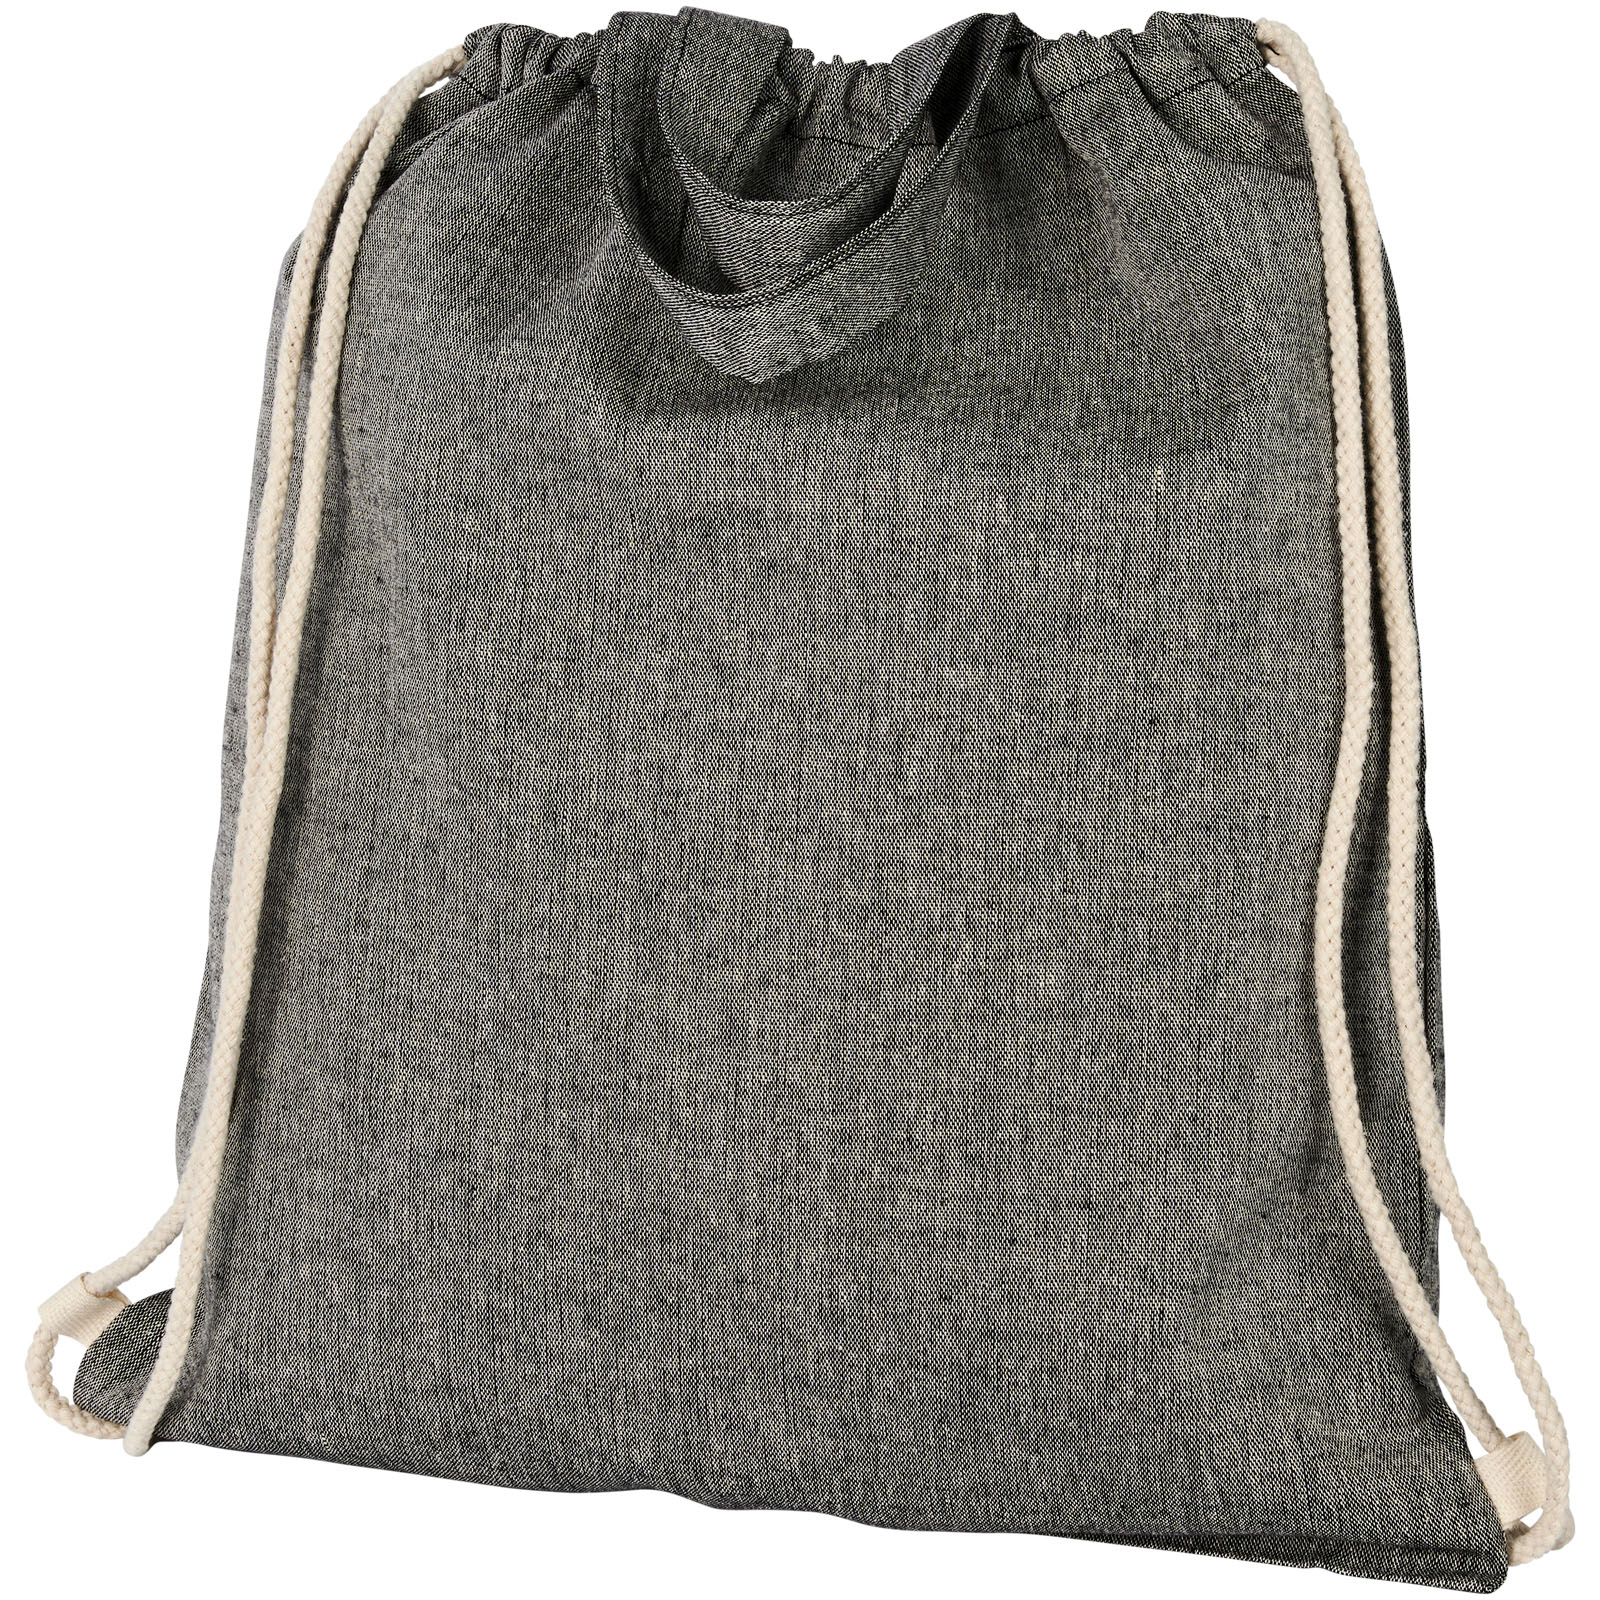 Advertising Drawstring Bags - Pheebs 150 g/m² recycled drawstring bag 6L - 3